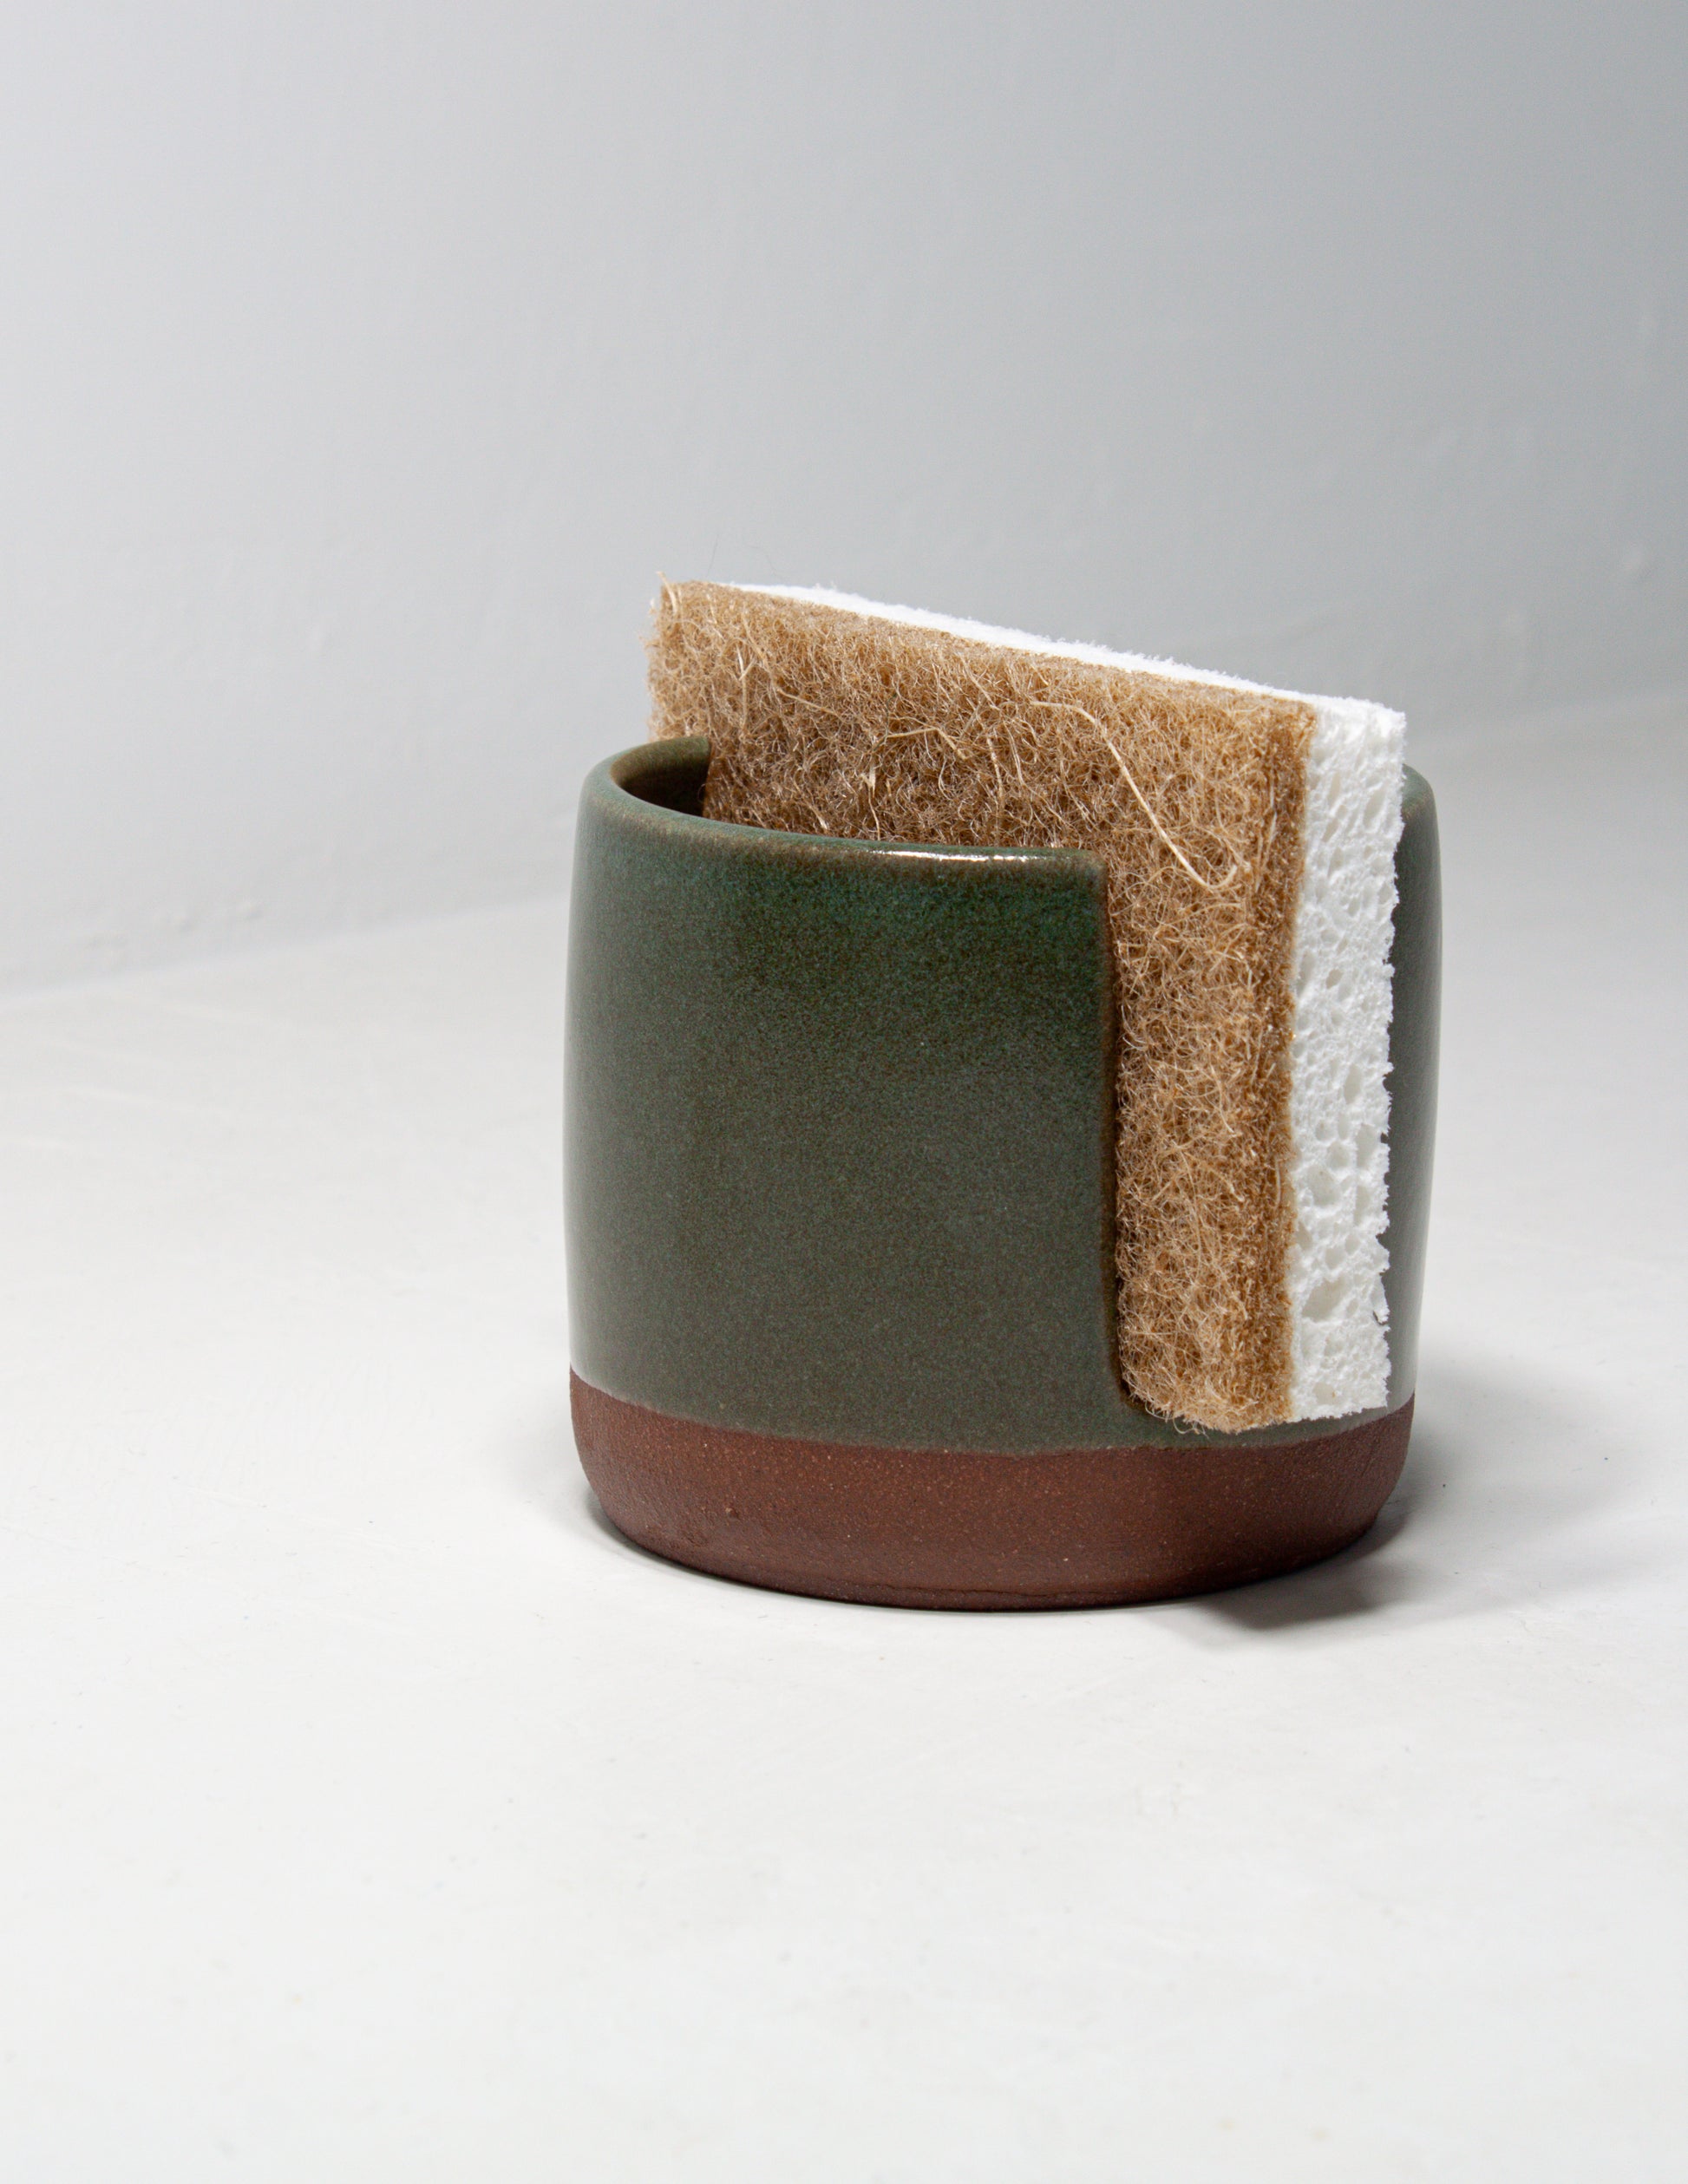 Moss green handmade ceramic sponge holder crafted by skilled artisans at Black Oak Art